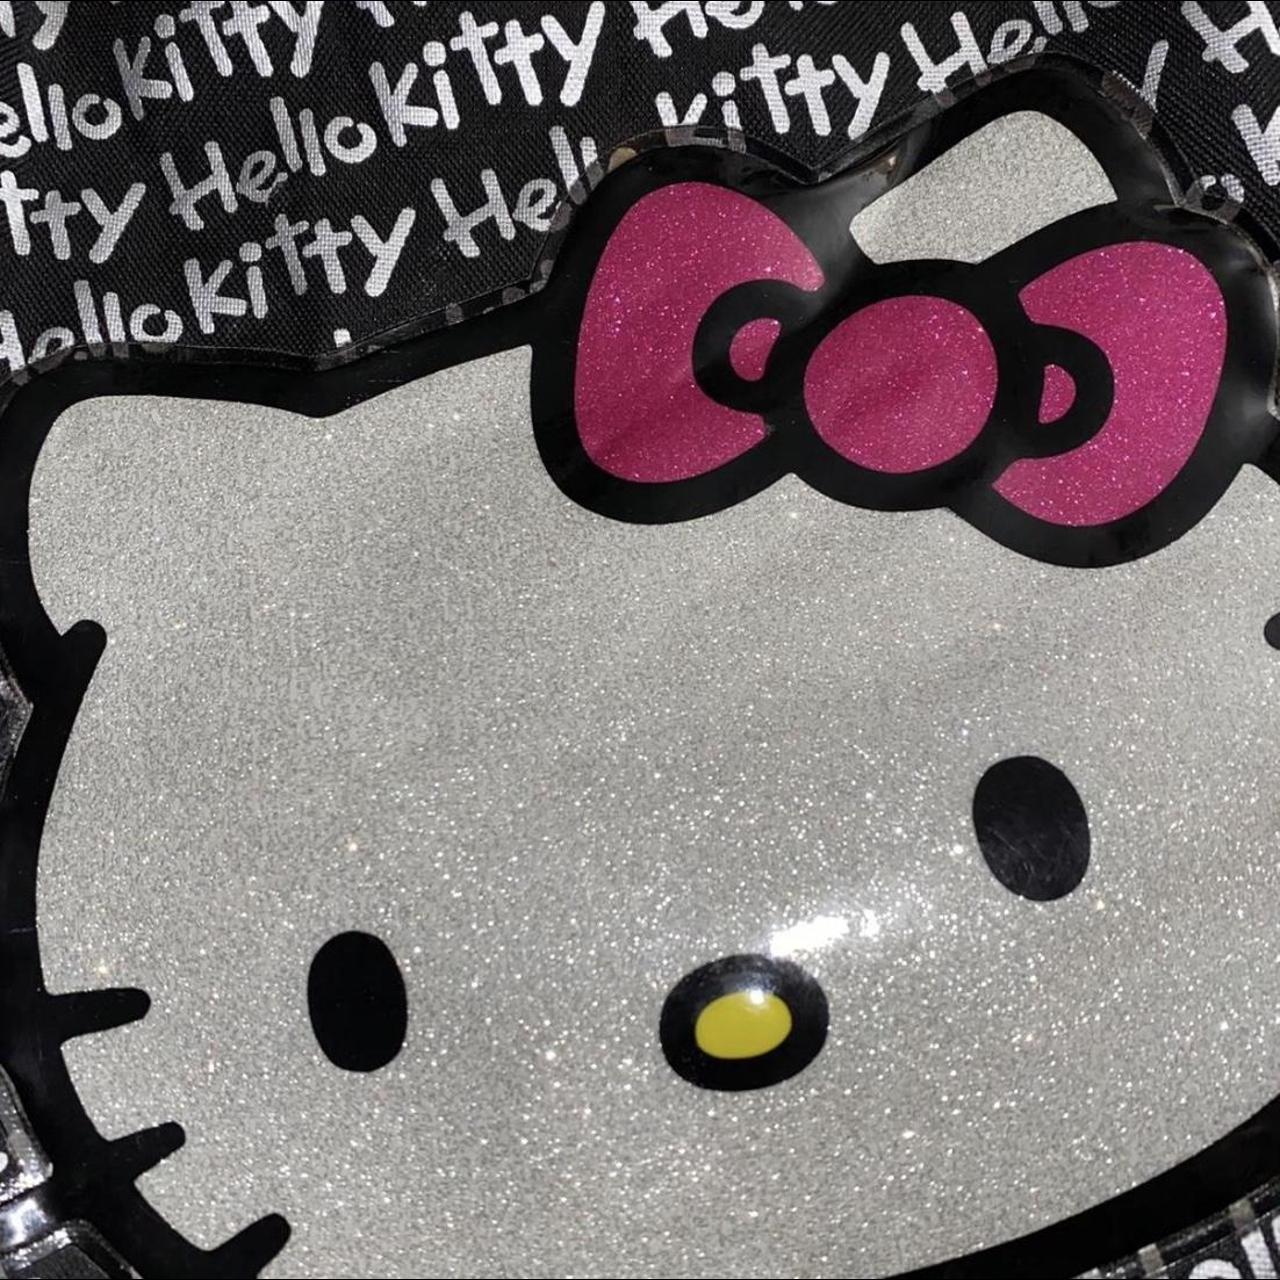 Sparkly Hello Kitty messenger bag! 🎀 super cute & - Depop